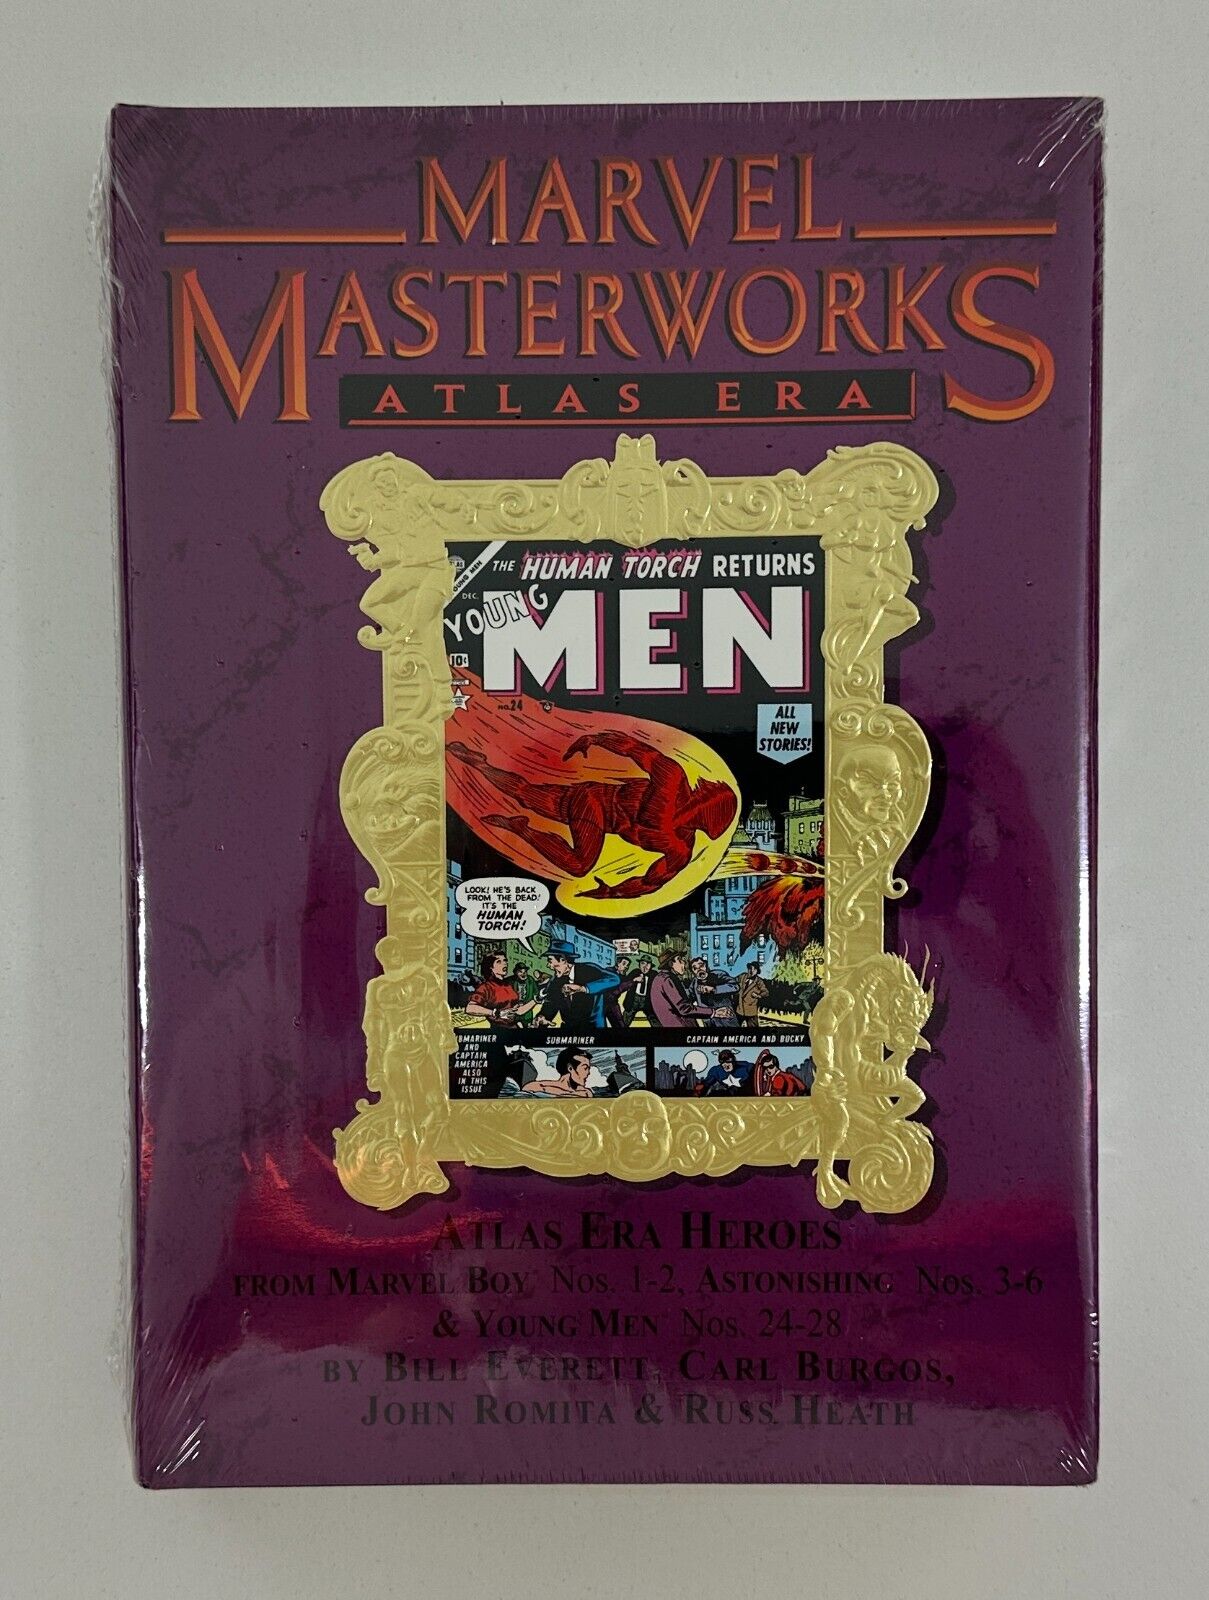 Marvel Masterworks vol. 73, Atlas Era Heroes Hardcover NEW #66A